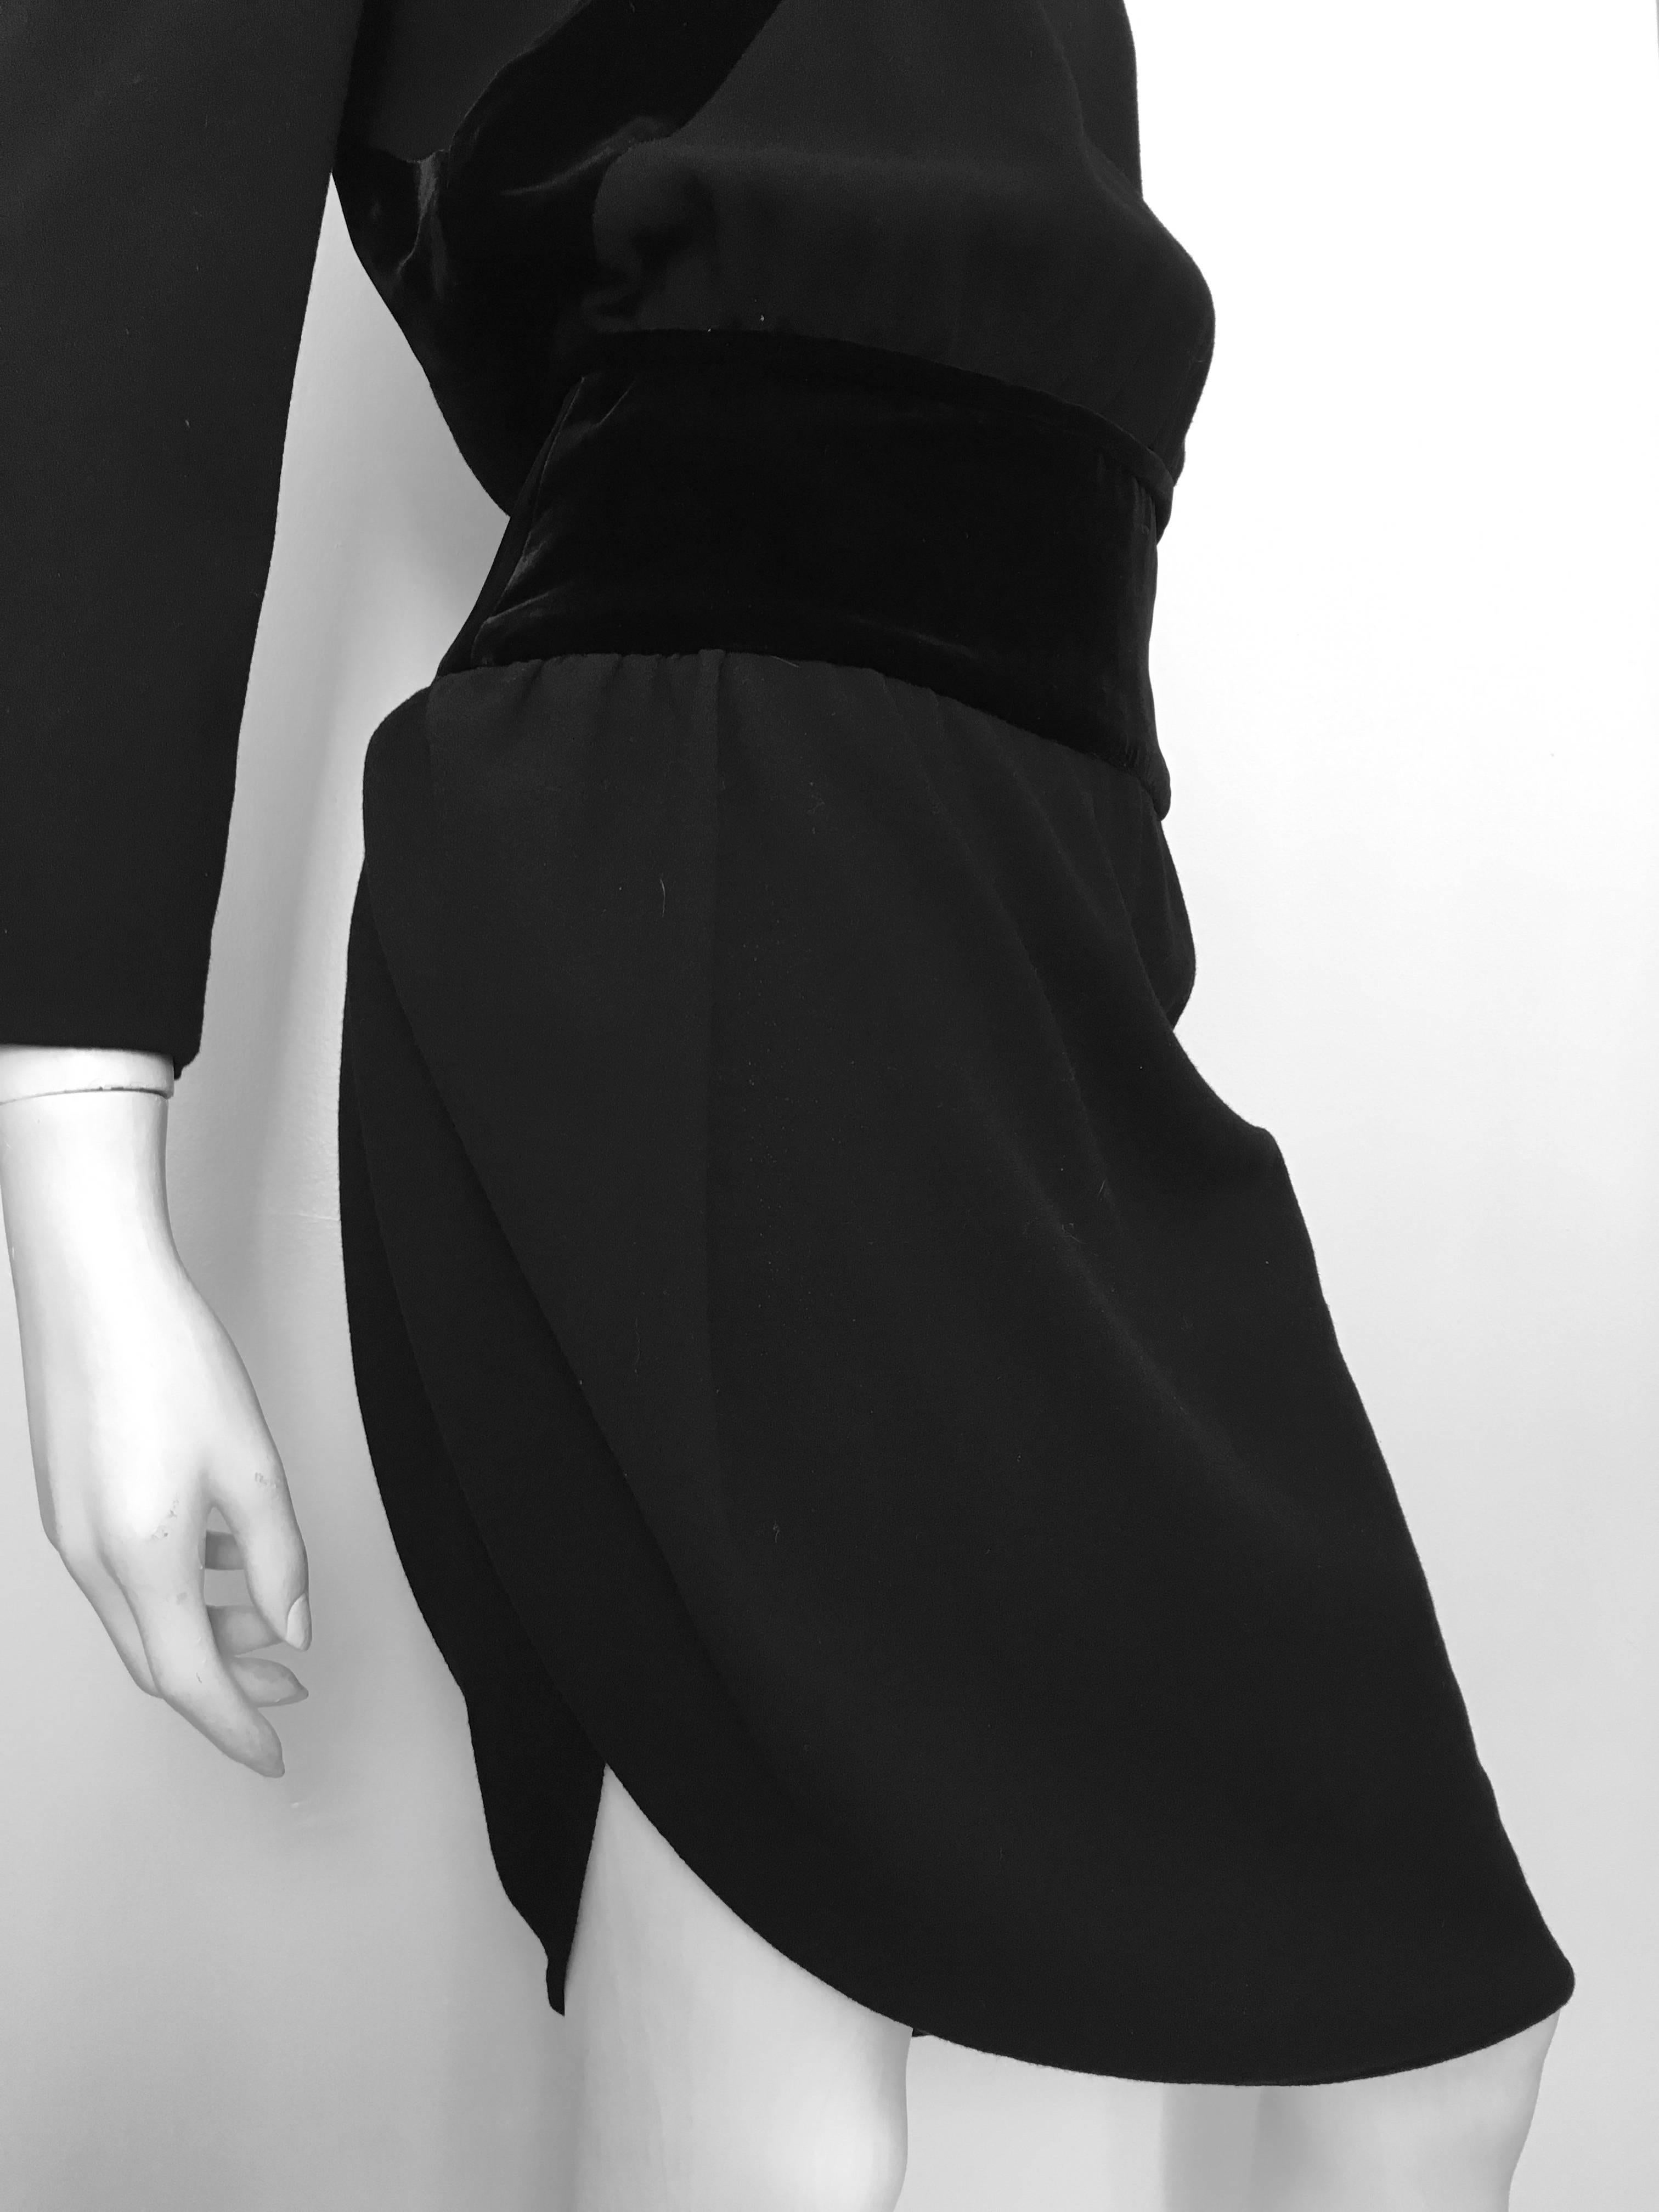 Valentino Boutique Black Wool Crepe Dress Size 6, 1980s 1